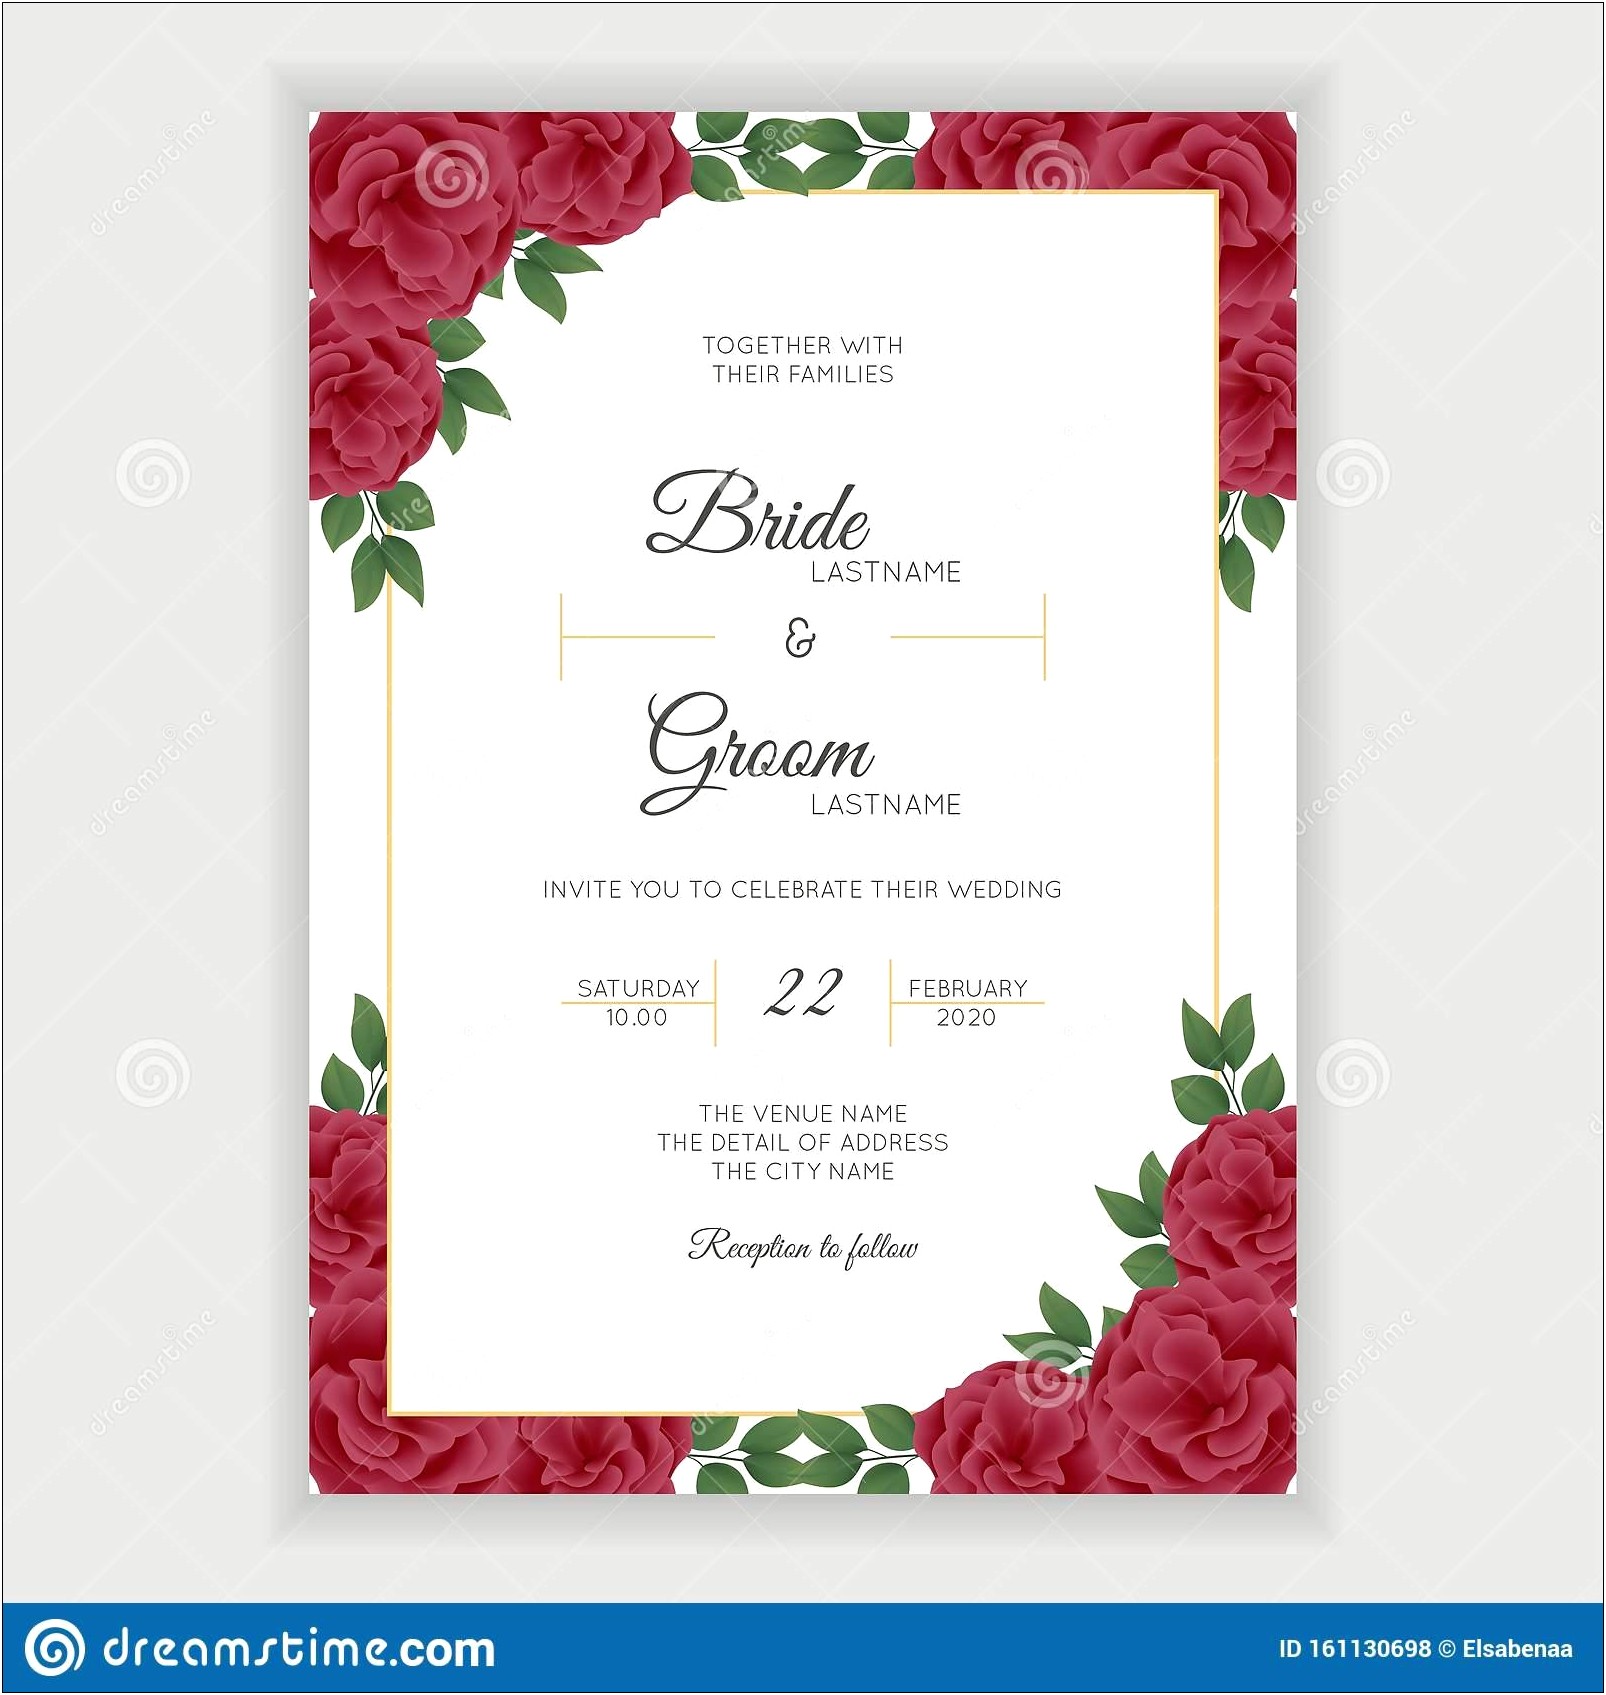 Vintage Wedding Invitation Card Template Free Download